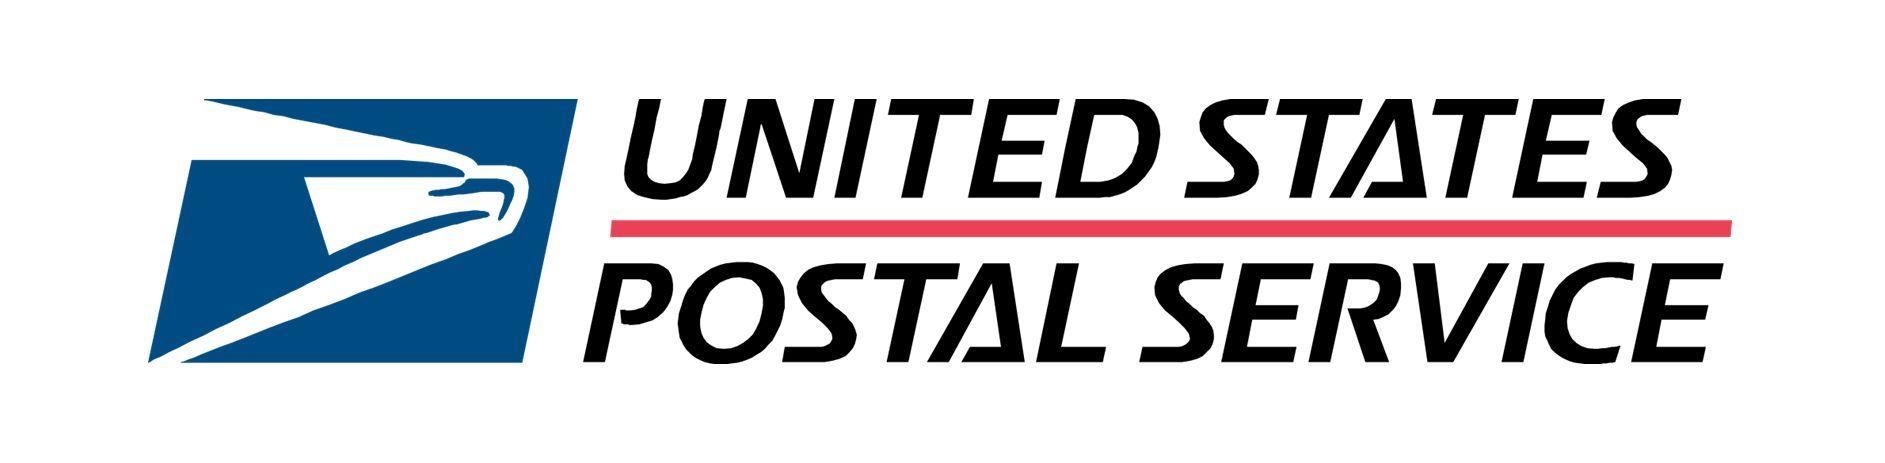 Us Postal Service Logo - United States Postal Service